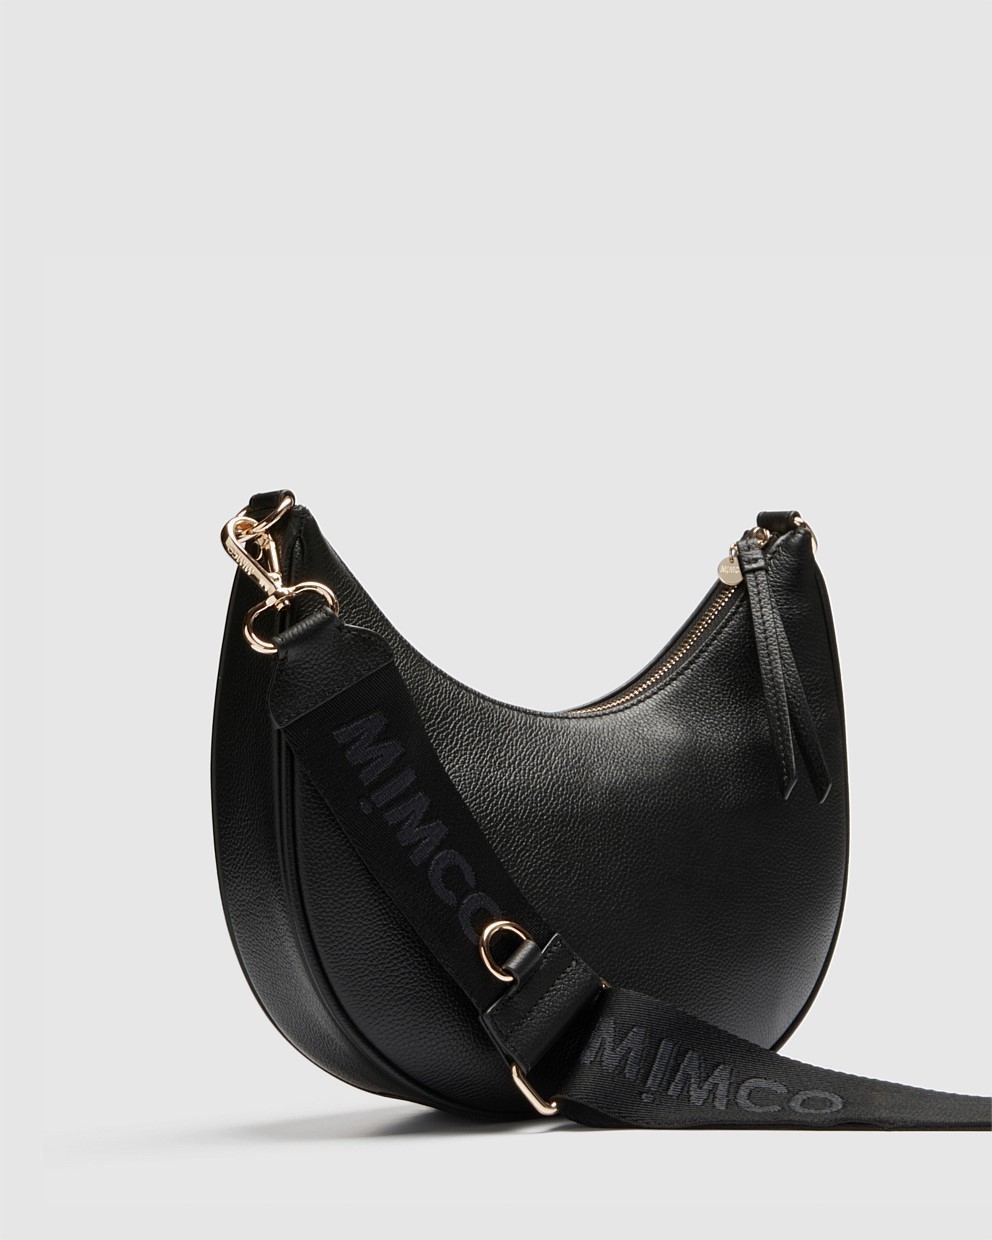 MIMCO SPLENSIOSA BABY BAG - Black with Rose Gold hardware - Bags & Luggage  - Edgeworth | Facebook Marketplace | Facebook